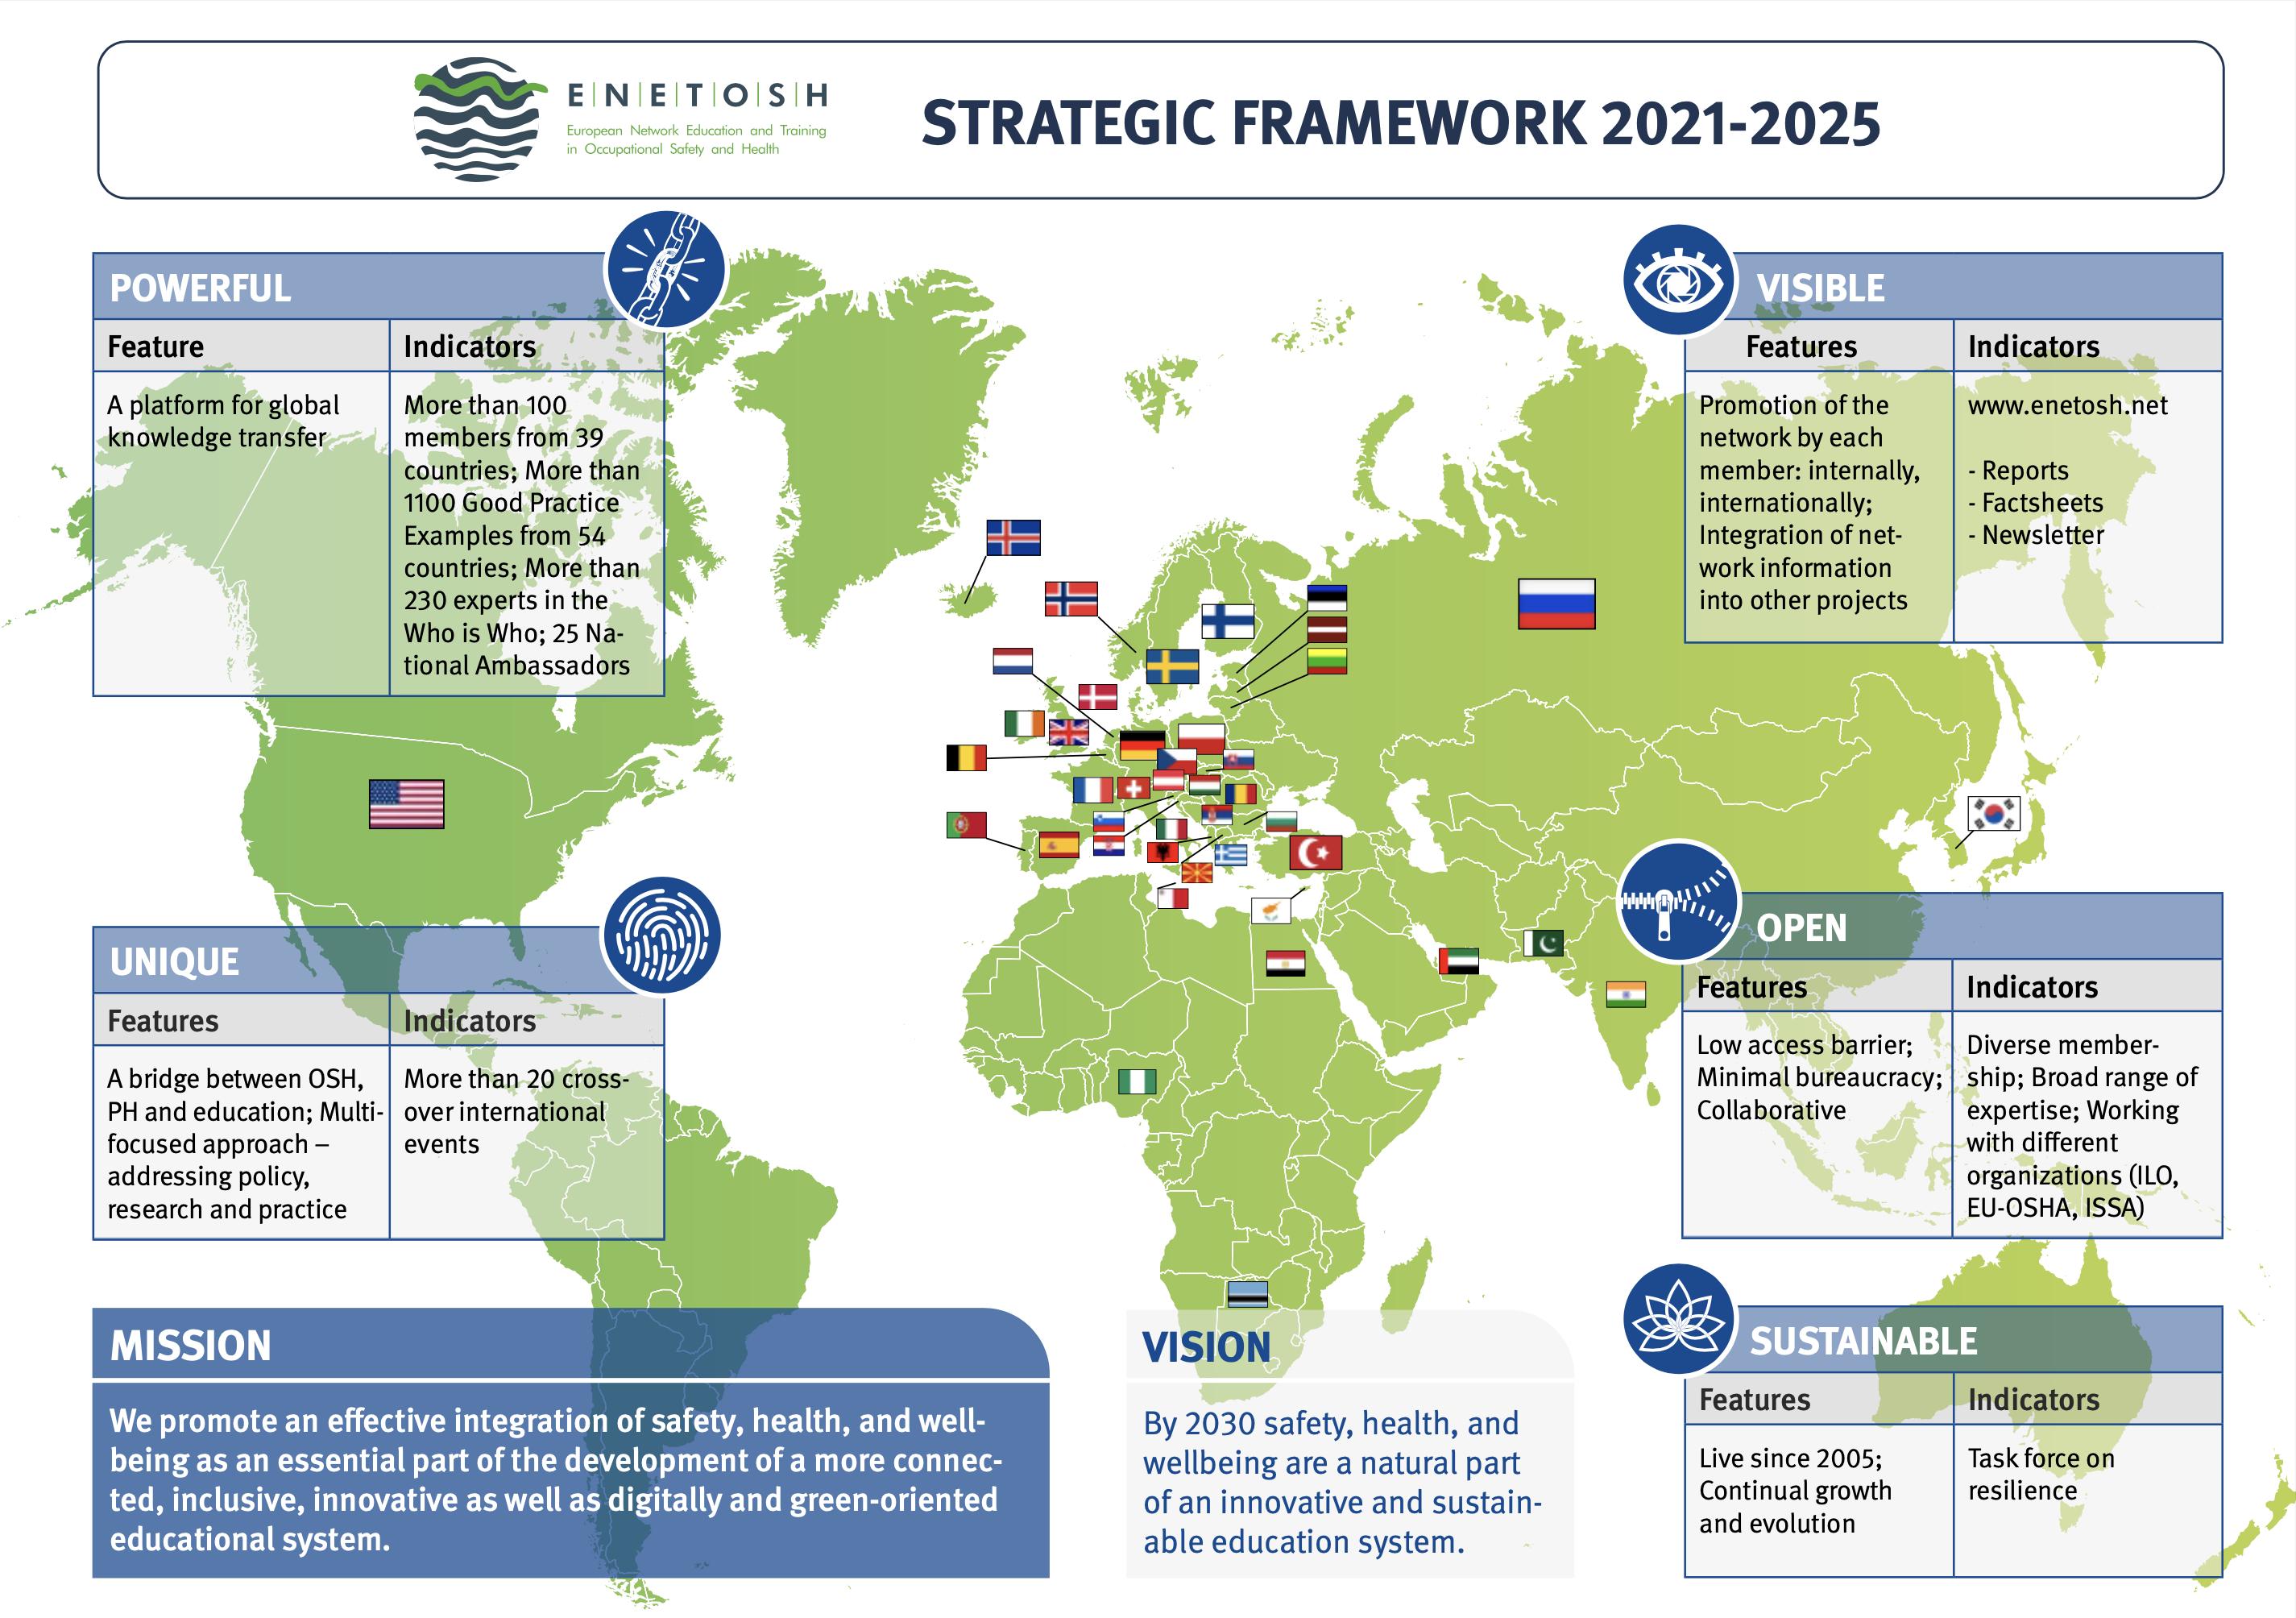 Picture: ENETOSH Strategic Framework 2021-2025